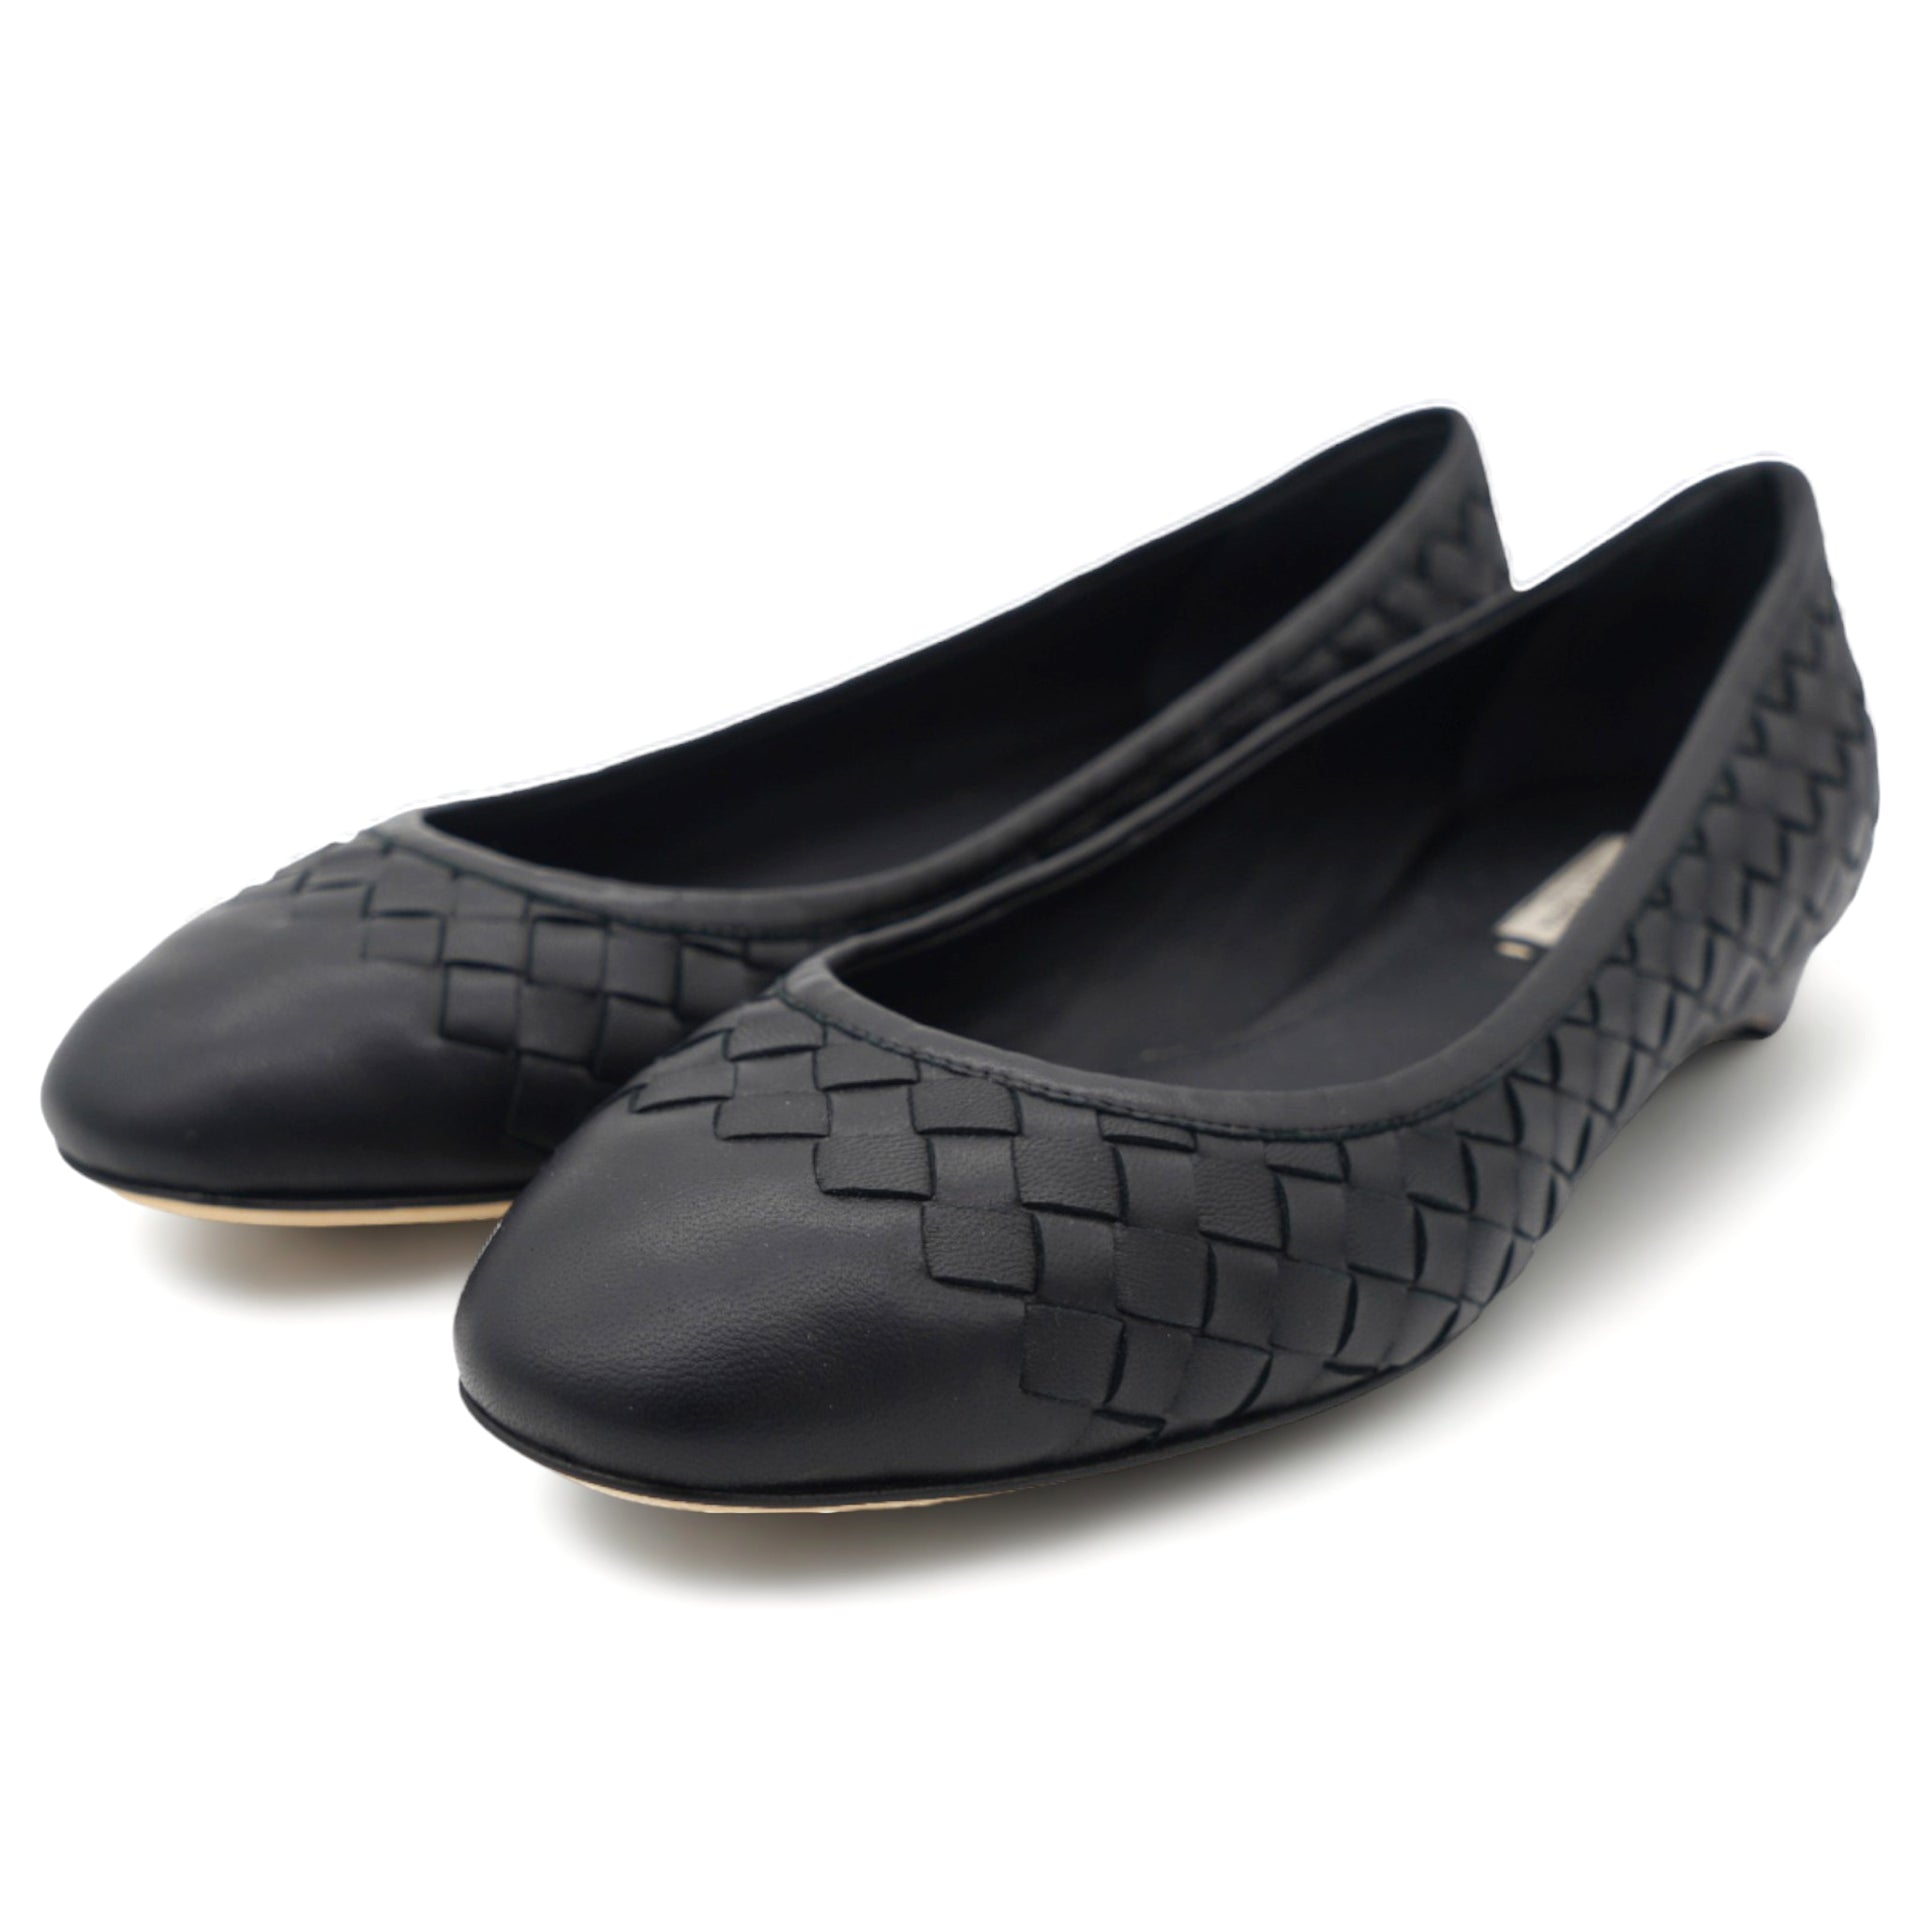 Black Intercciato Leather Ballet Flats 35.5